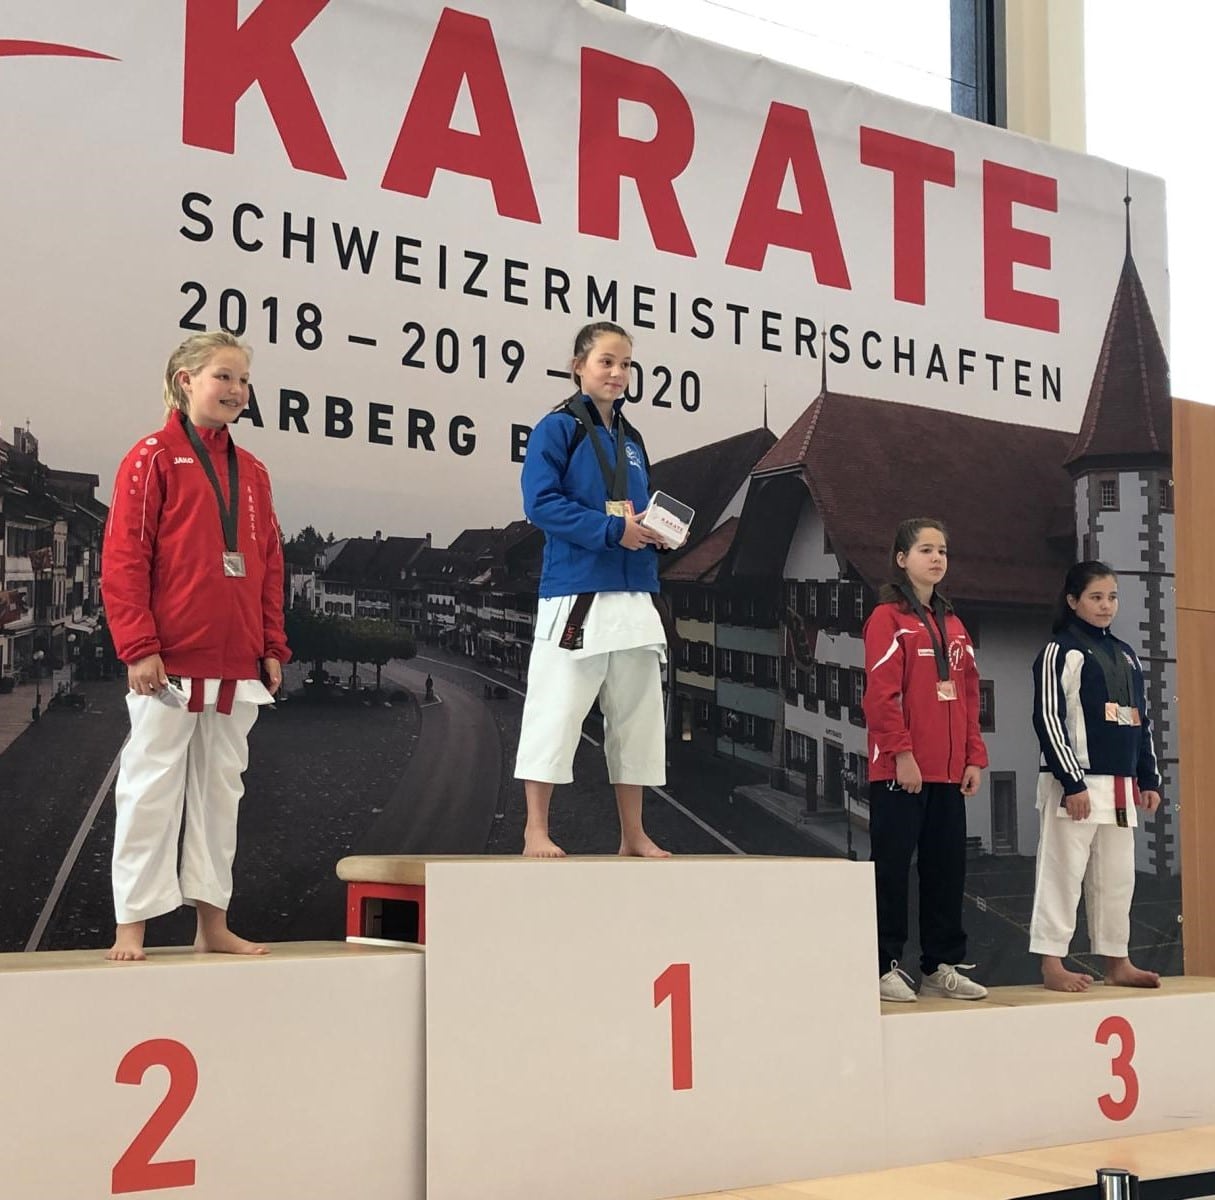 Karatekai Basel - SKF Karate Schweizermeisterschaften 2018 in Aarberg